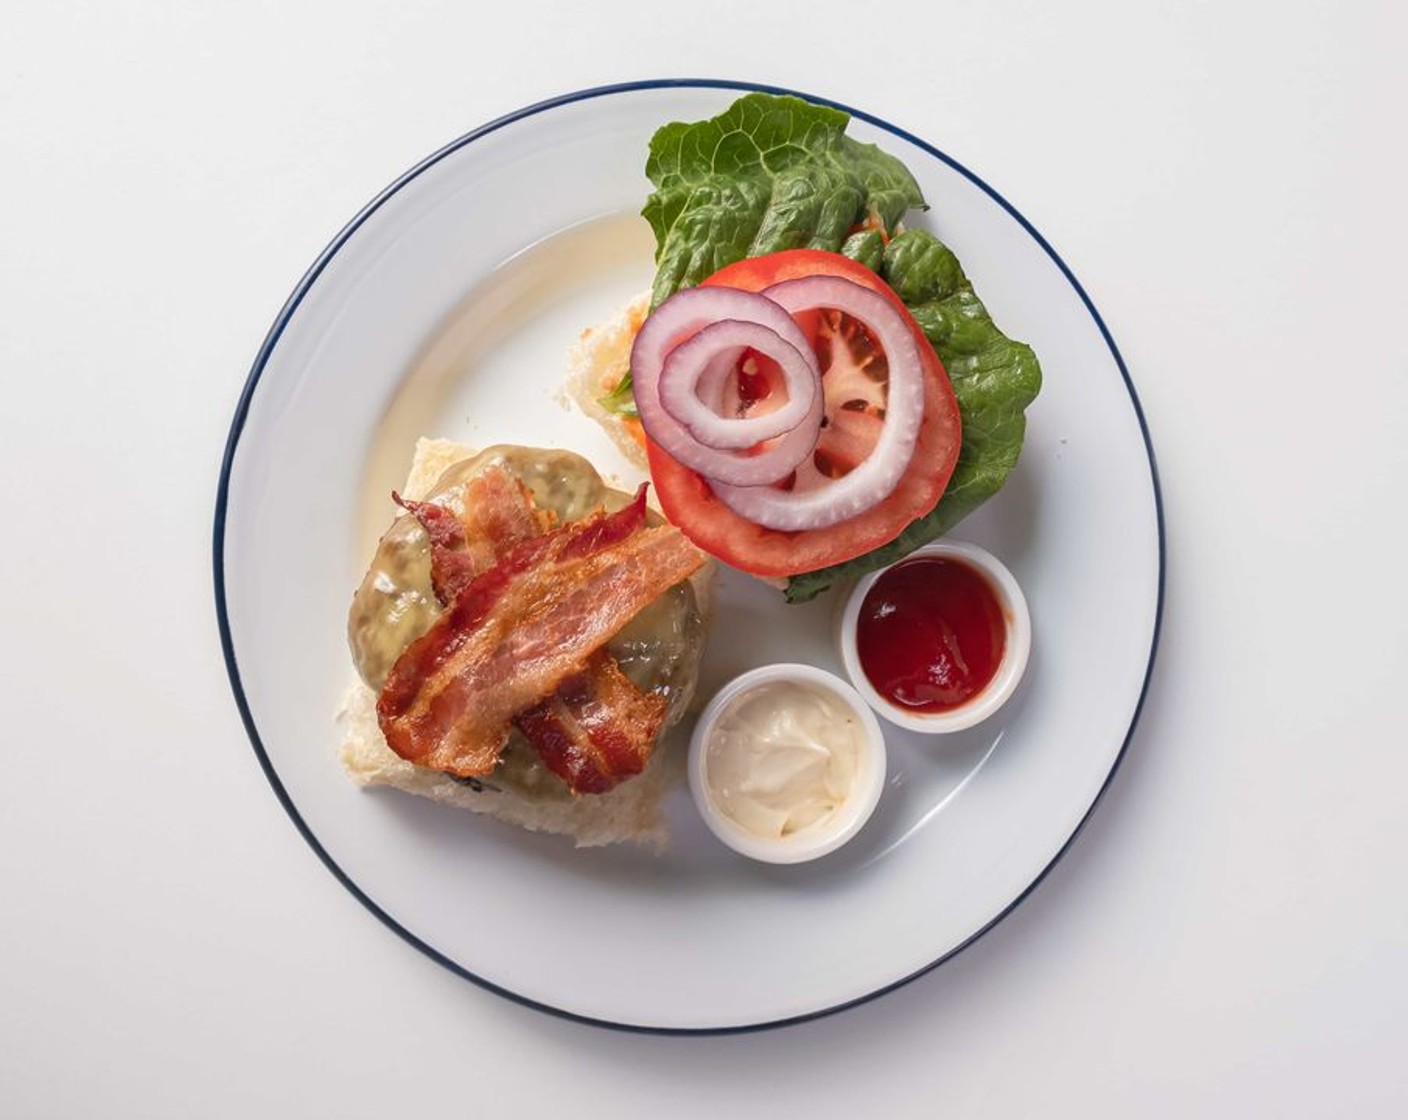 Mushroom-Blended Burger with Kickin’ Toppings